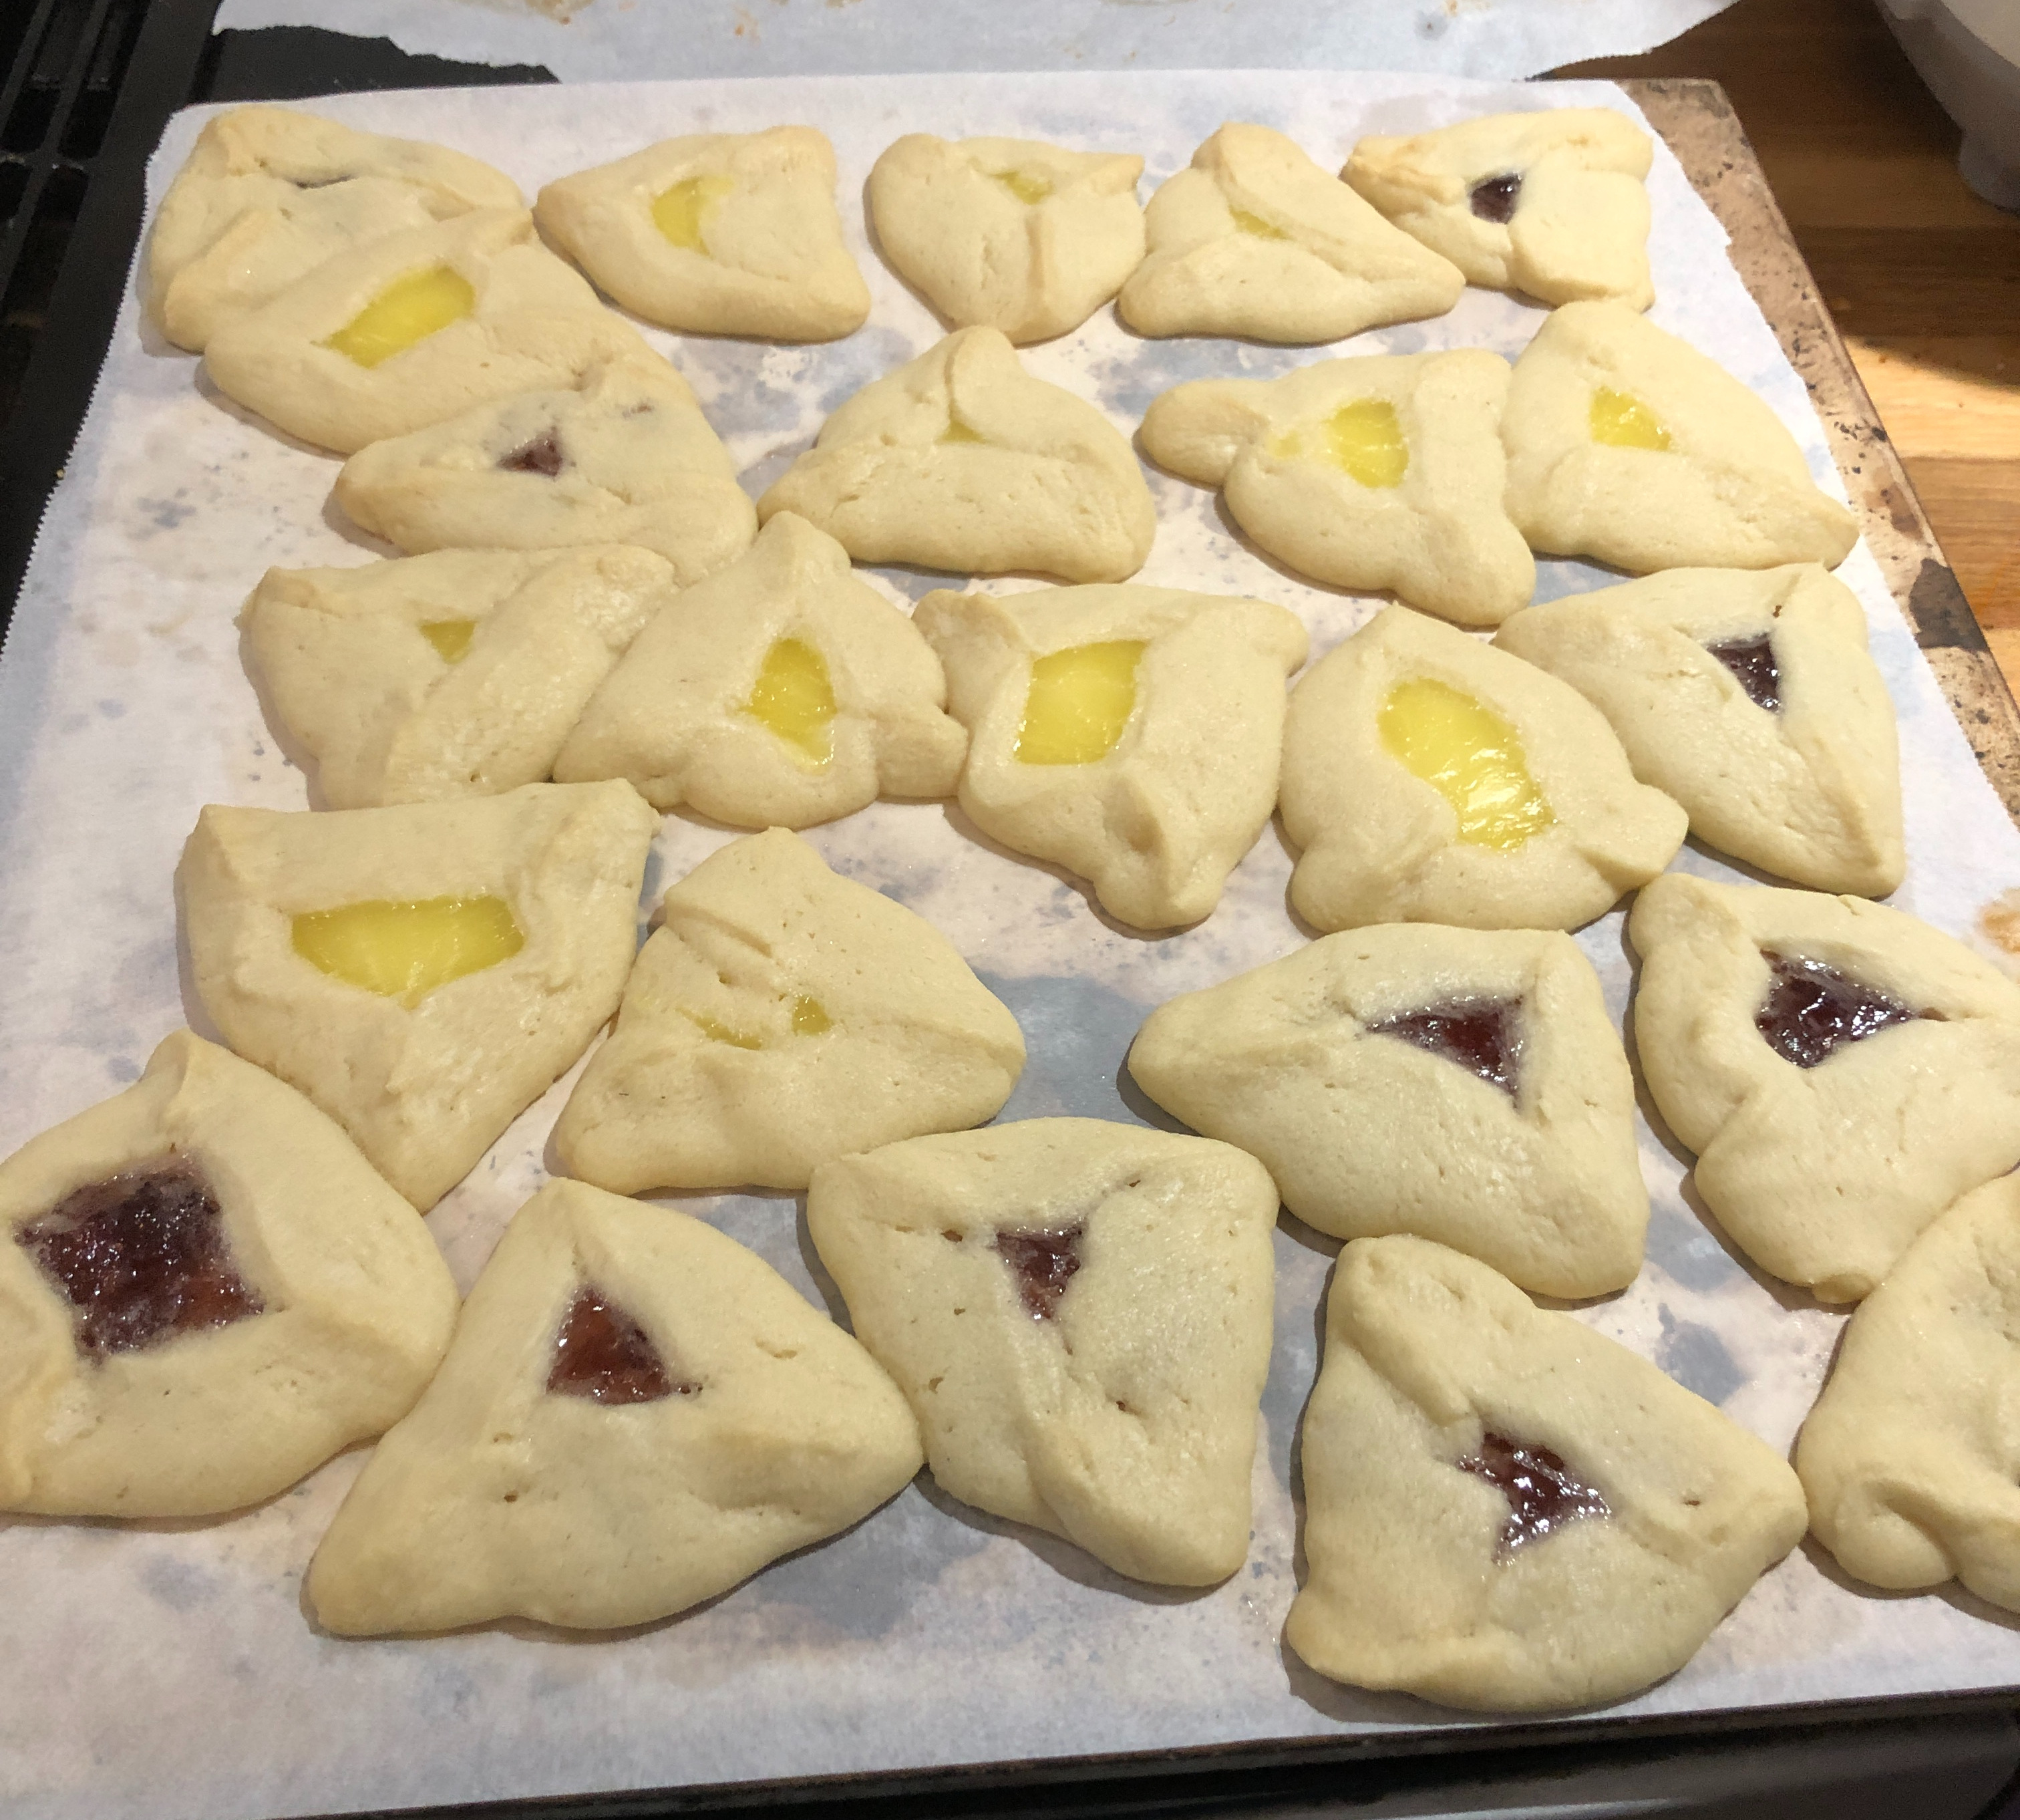 a tray of hamentaschen (triangular jam-filled cookies)